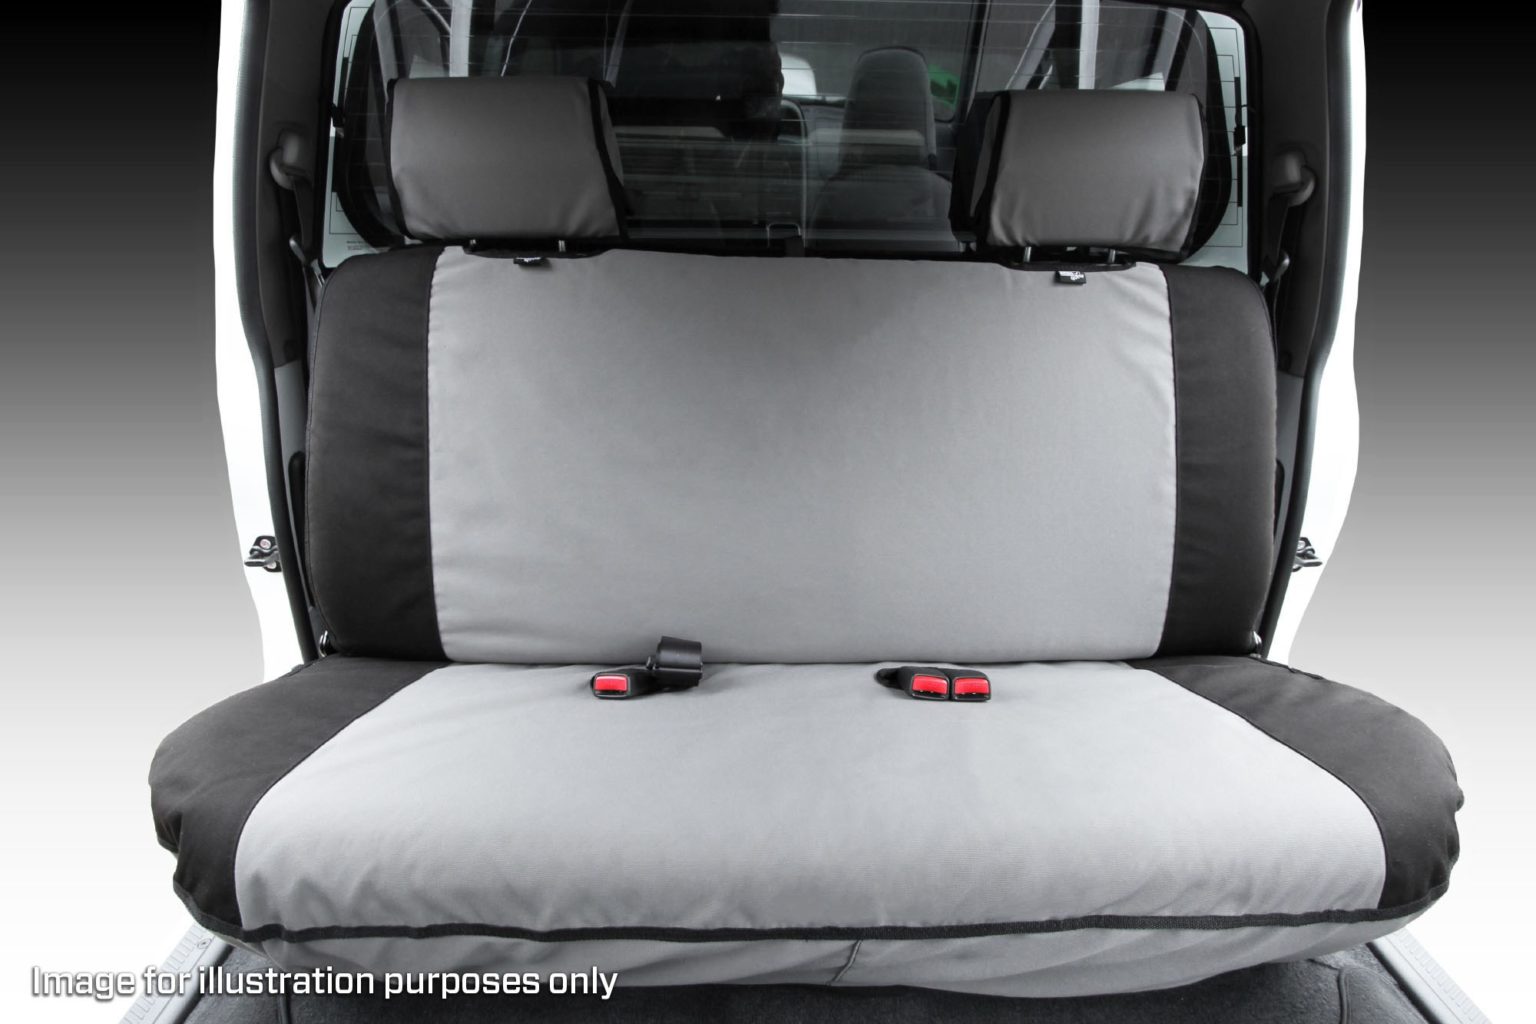 MSA Toyota Hilux Rear Extra Cab Small 50/50 Bench Single Back (No